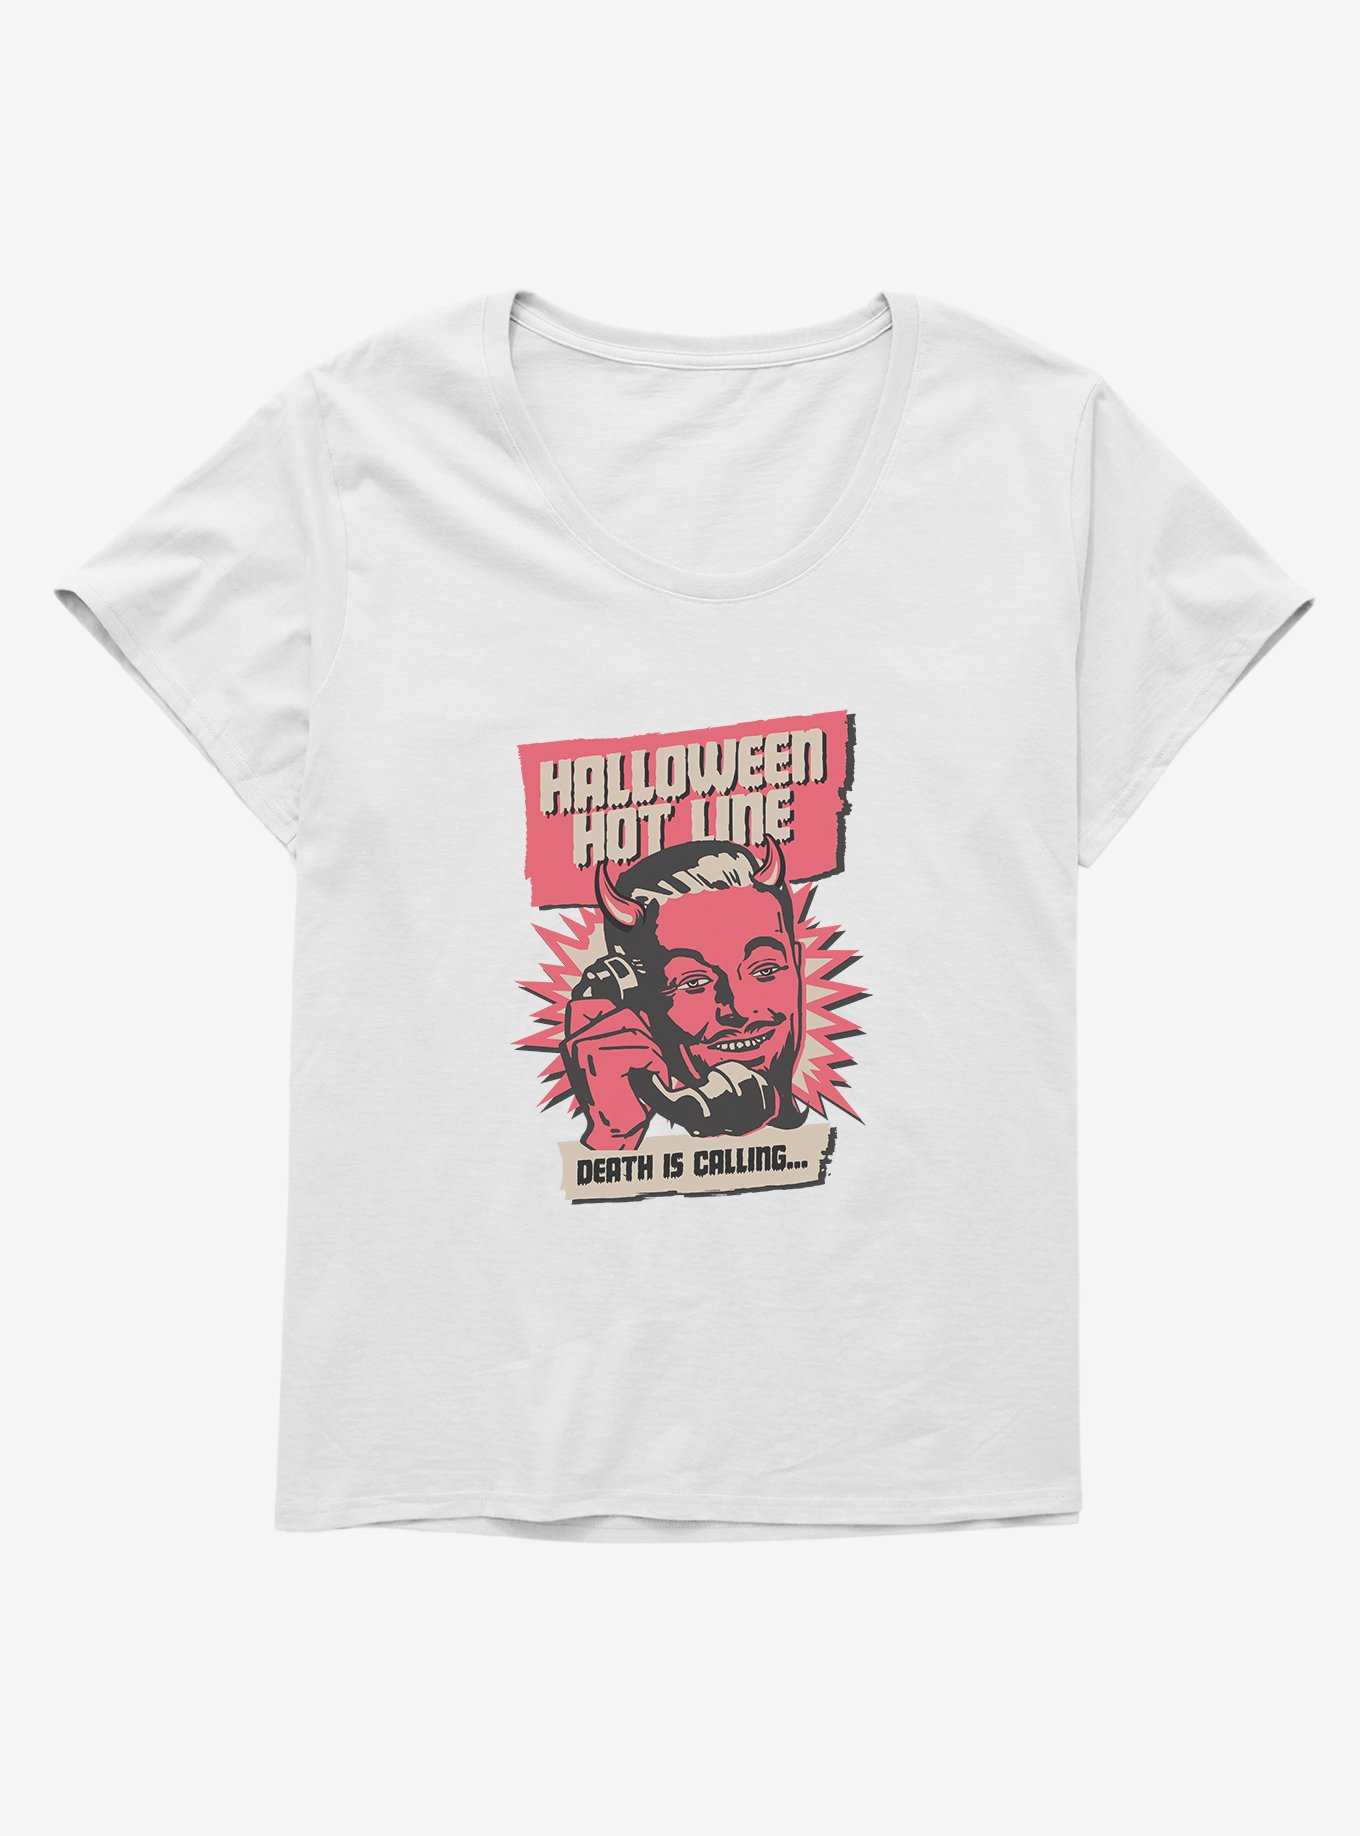 Halloween Halloween Hot Line Girls Plus Size T-Shirt, , hi-res